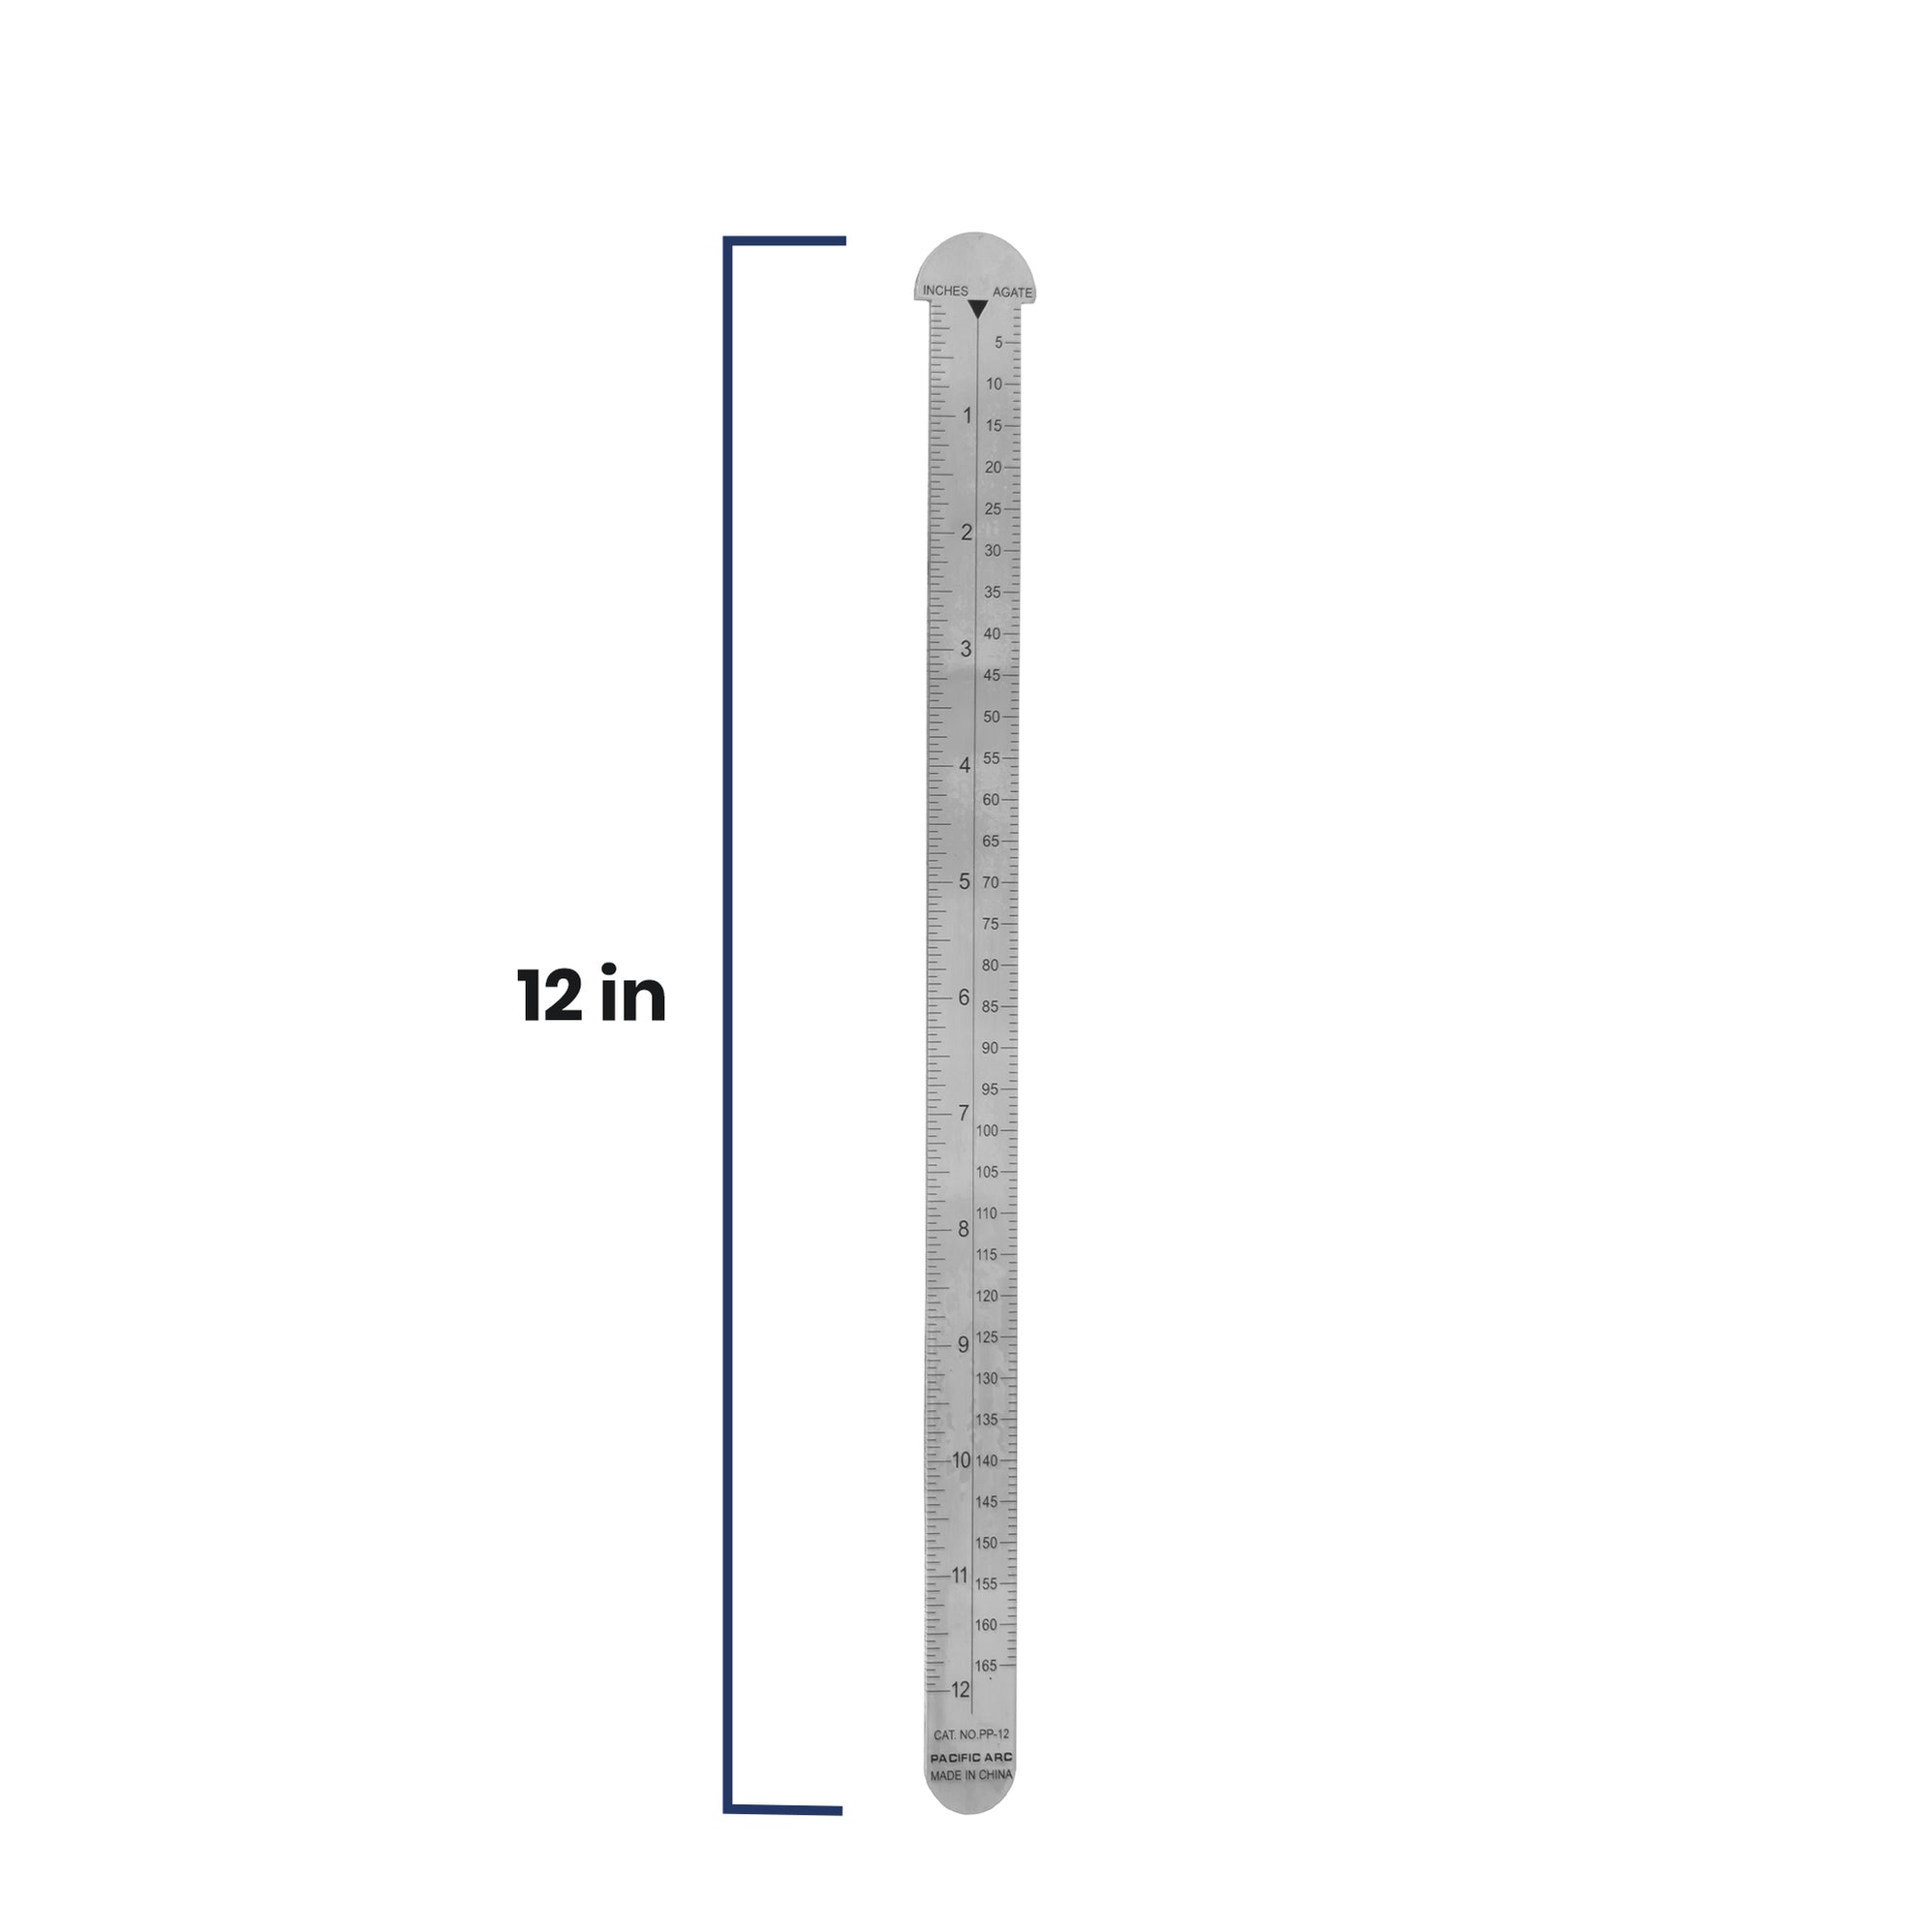 type measurement pica point measure depth of column